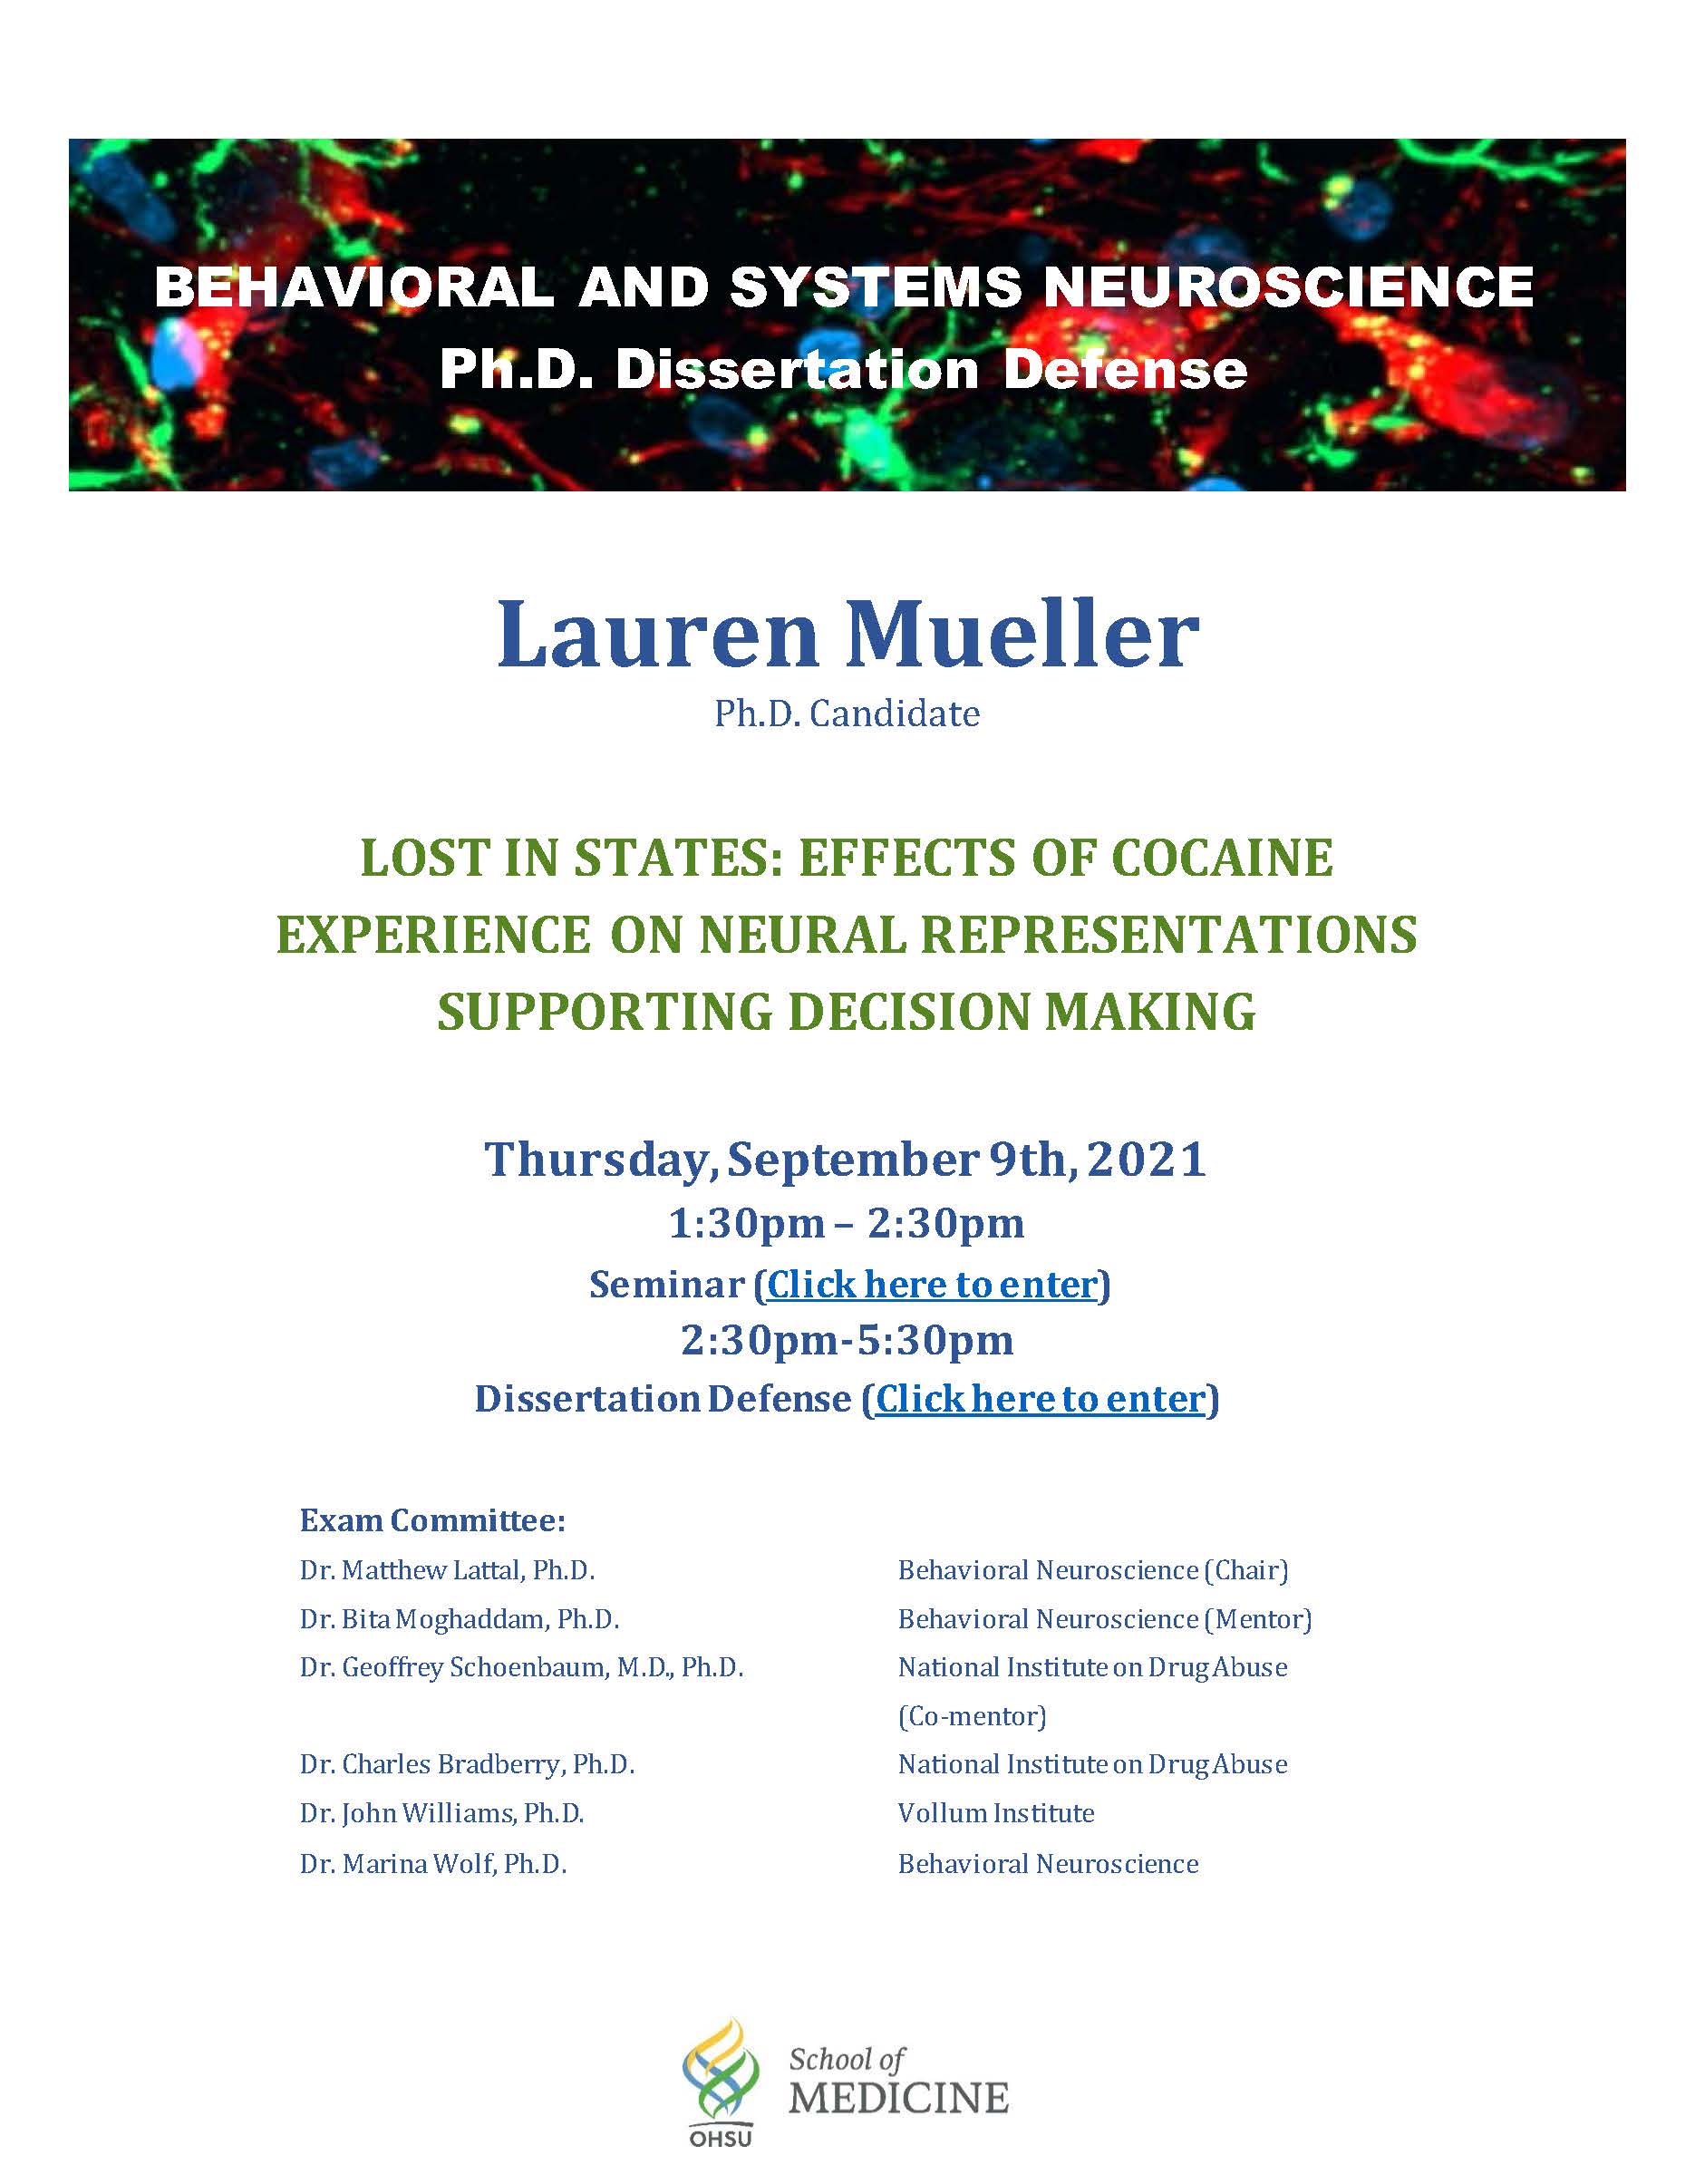 Lauren Mueller Ph.D. Dissertation Defense Flyer2